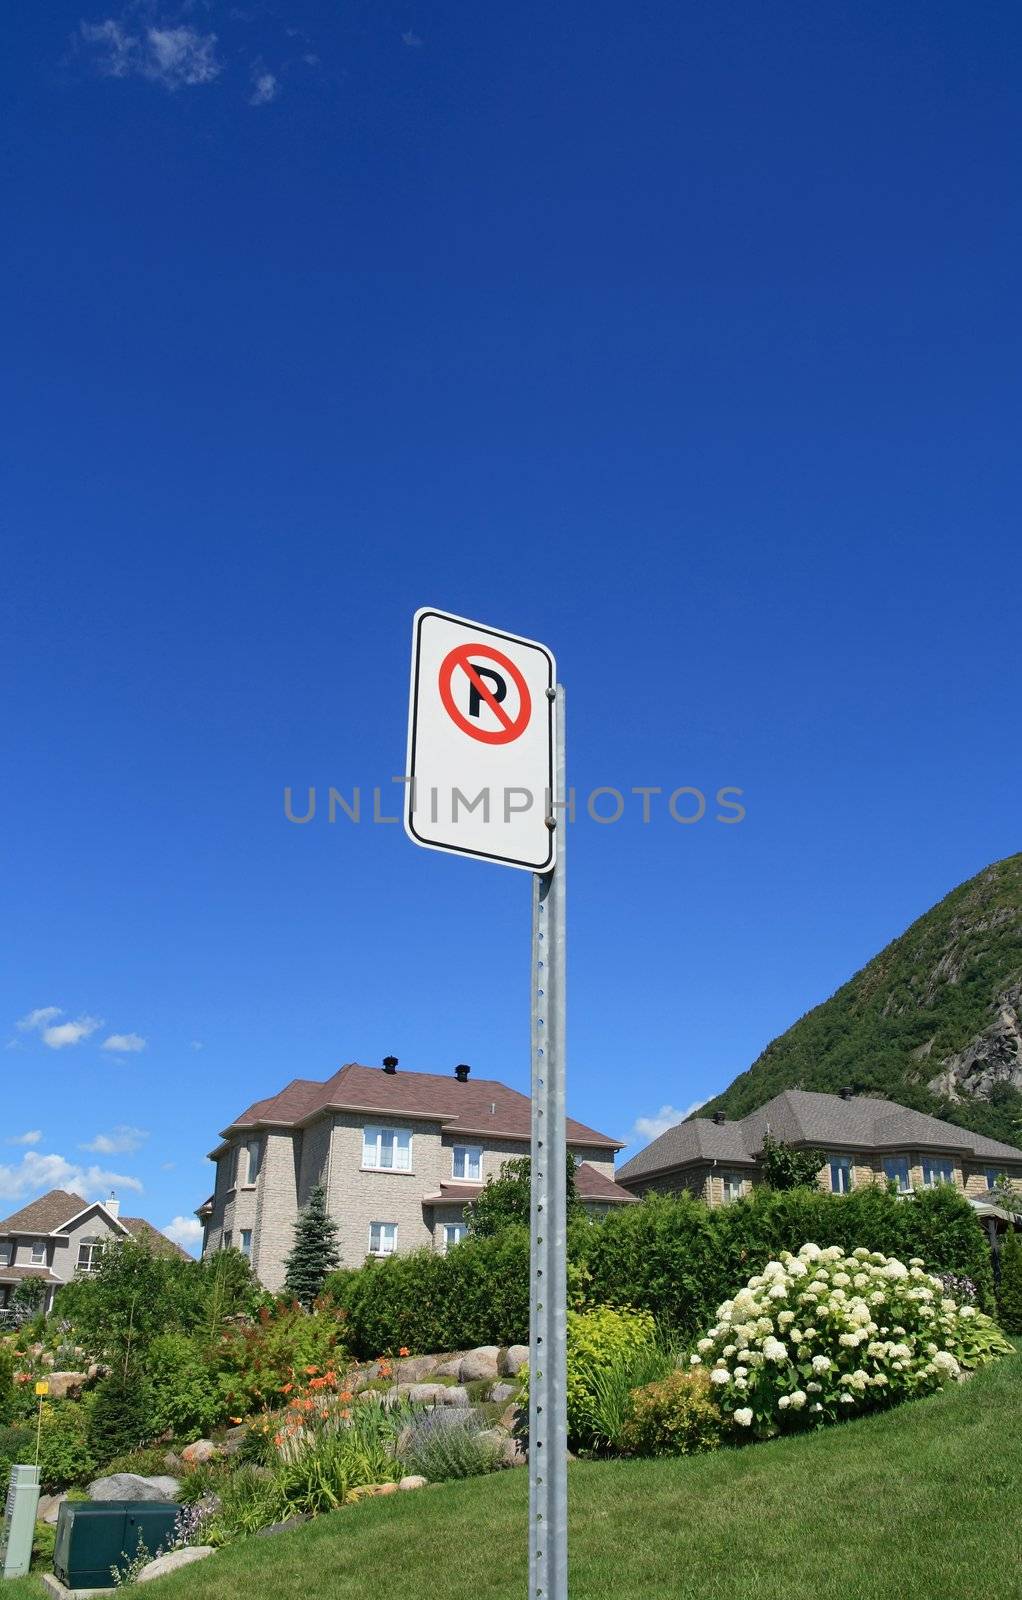 No parking sign in a prestigious suburban neighborhood near mountains.